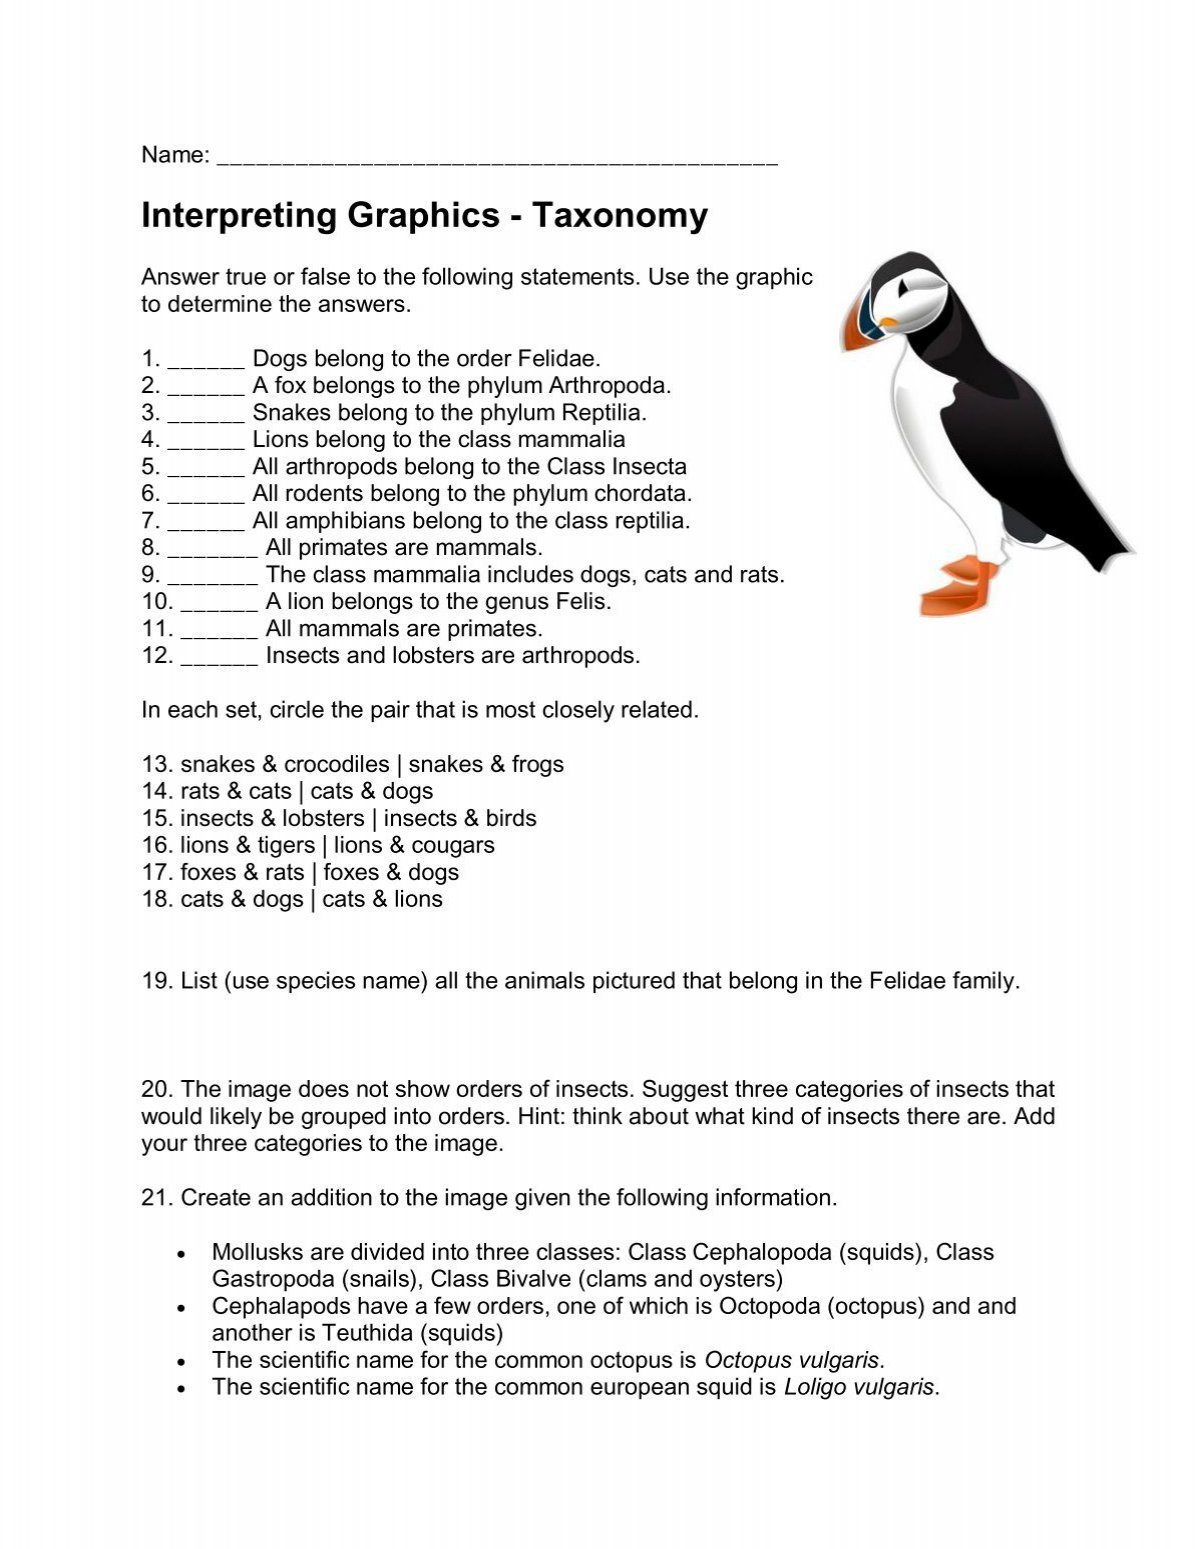 interpreting-graphics-taxonomy-first-class-information